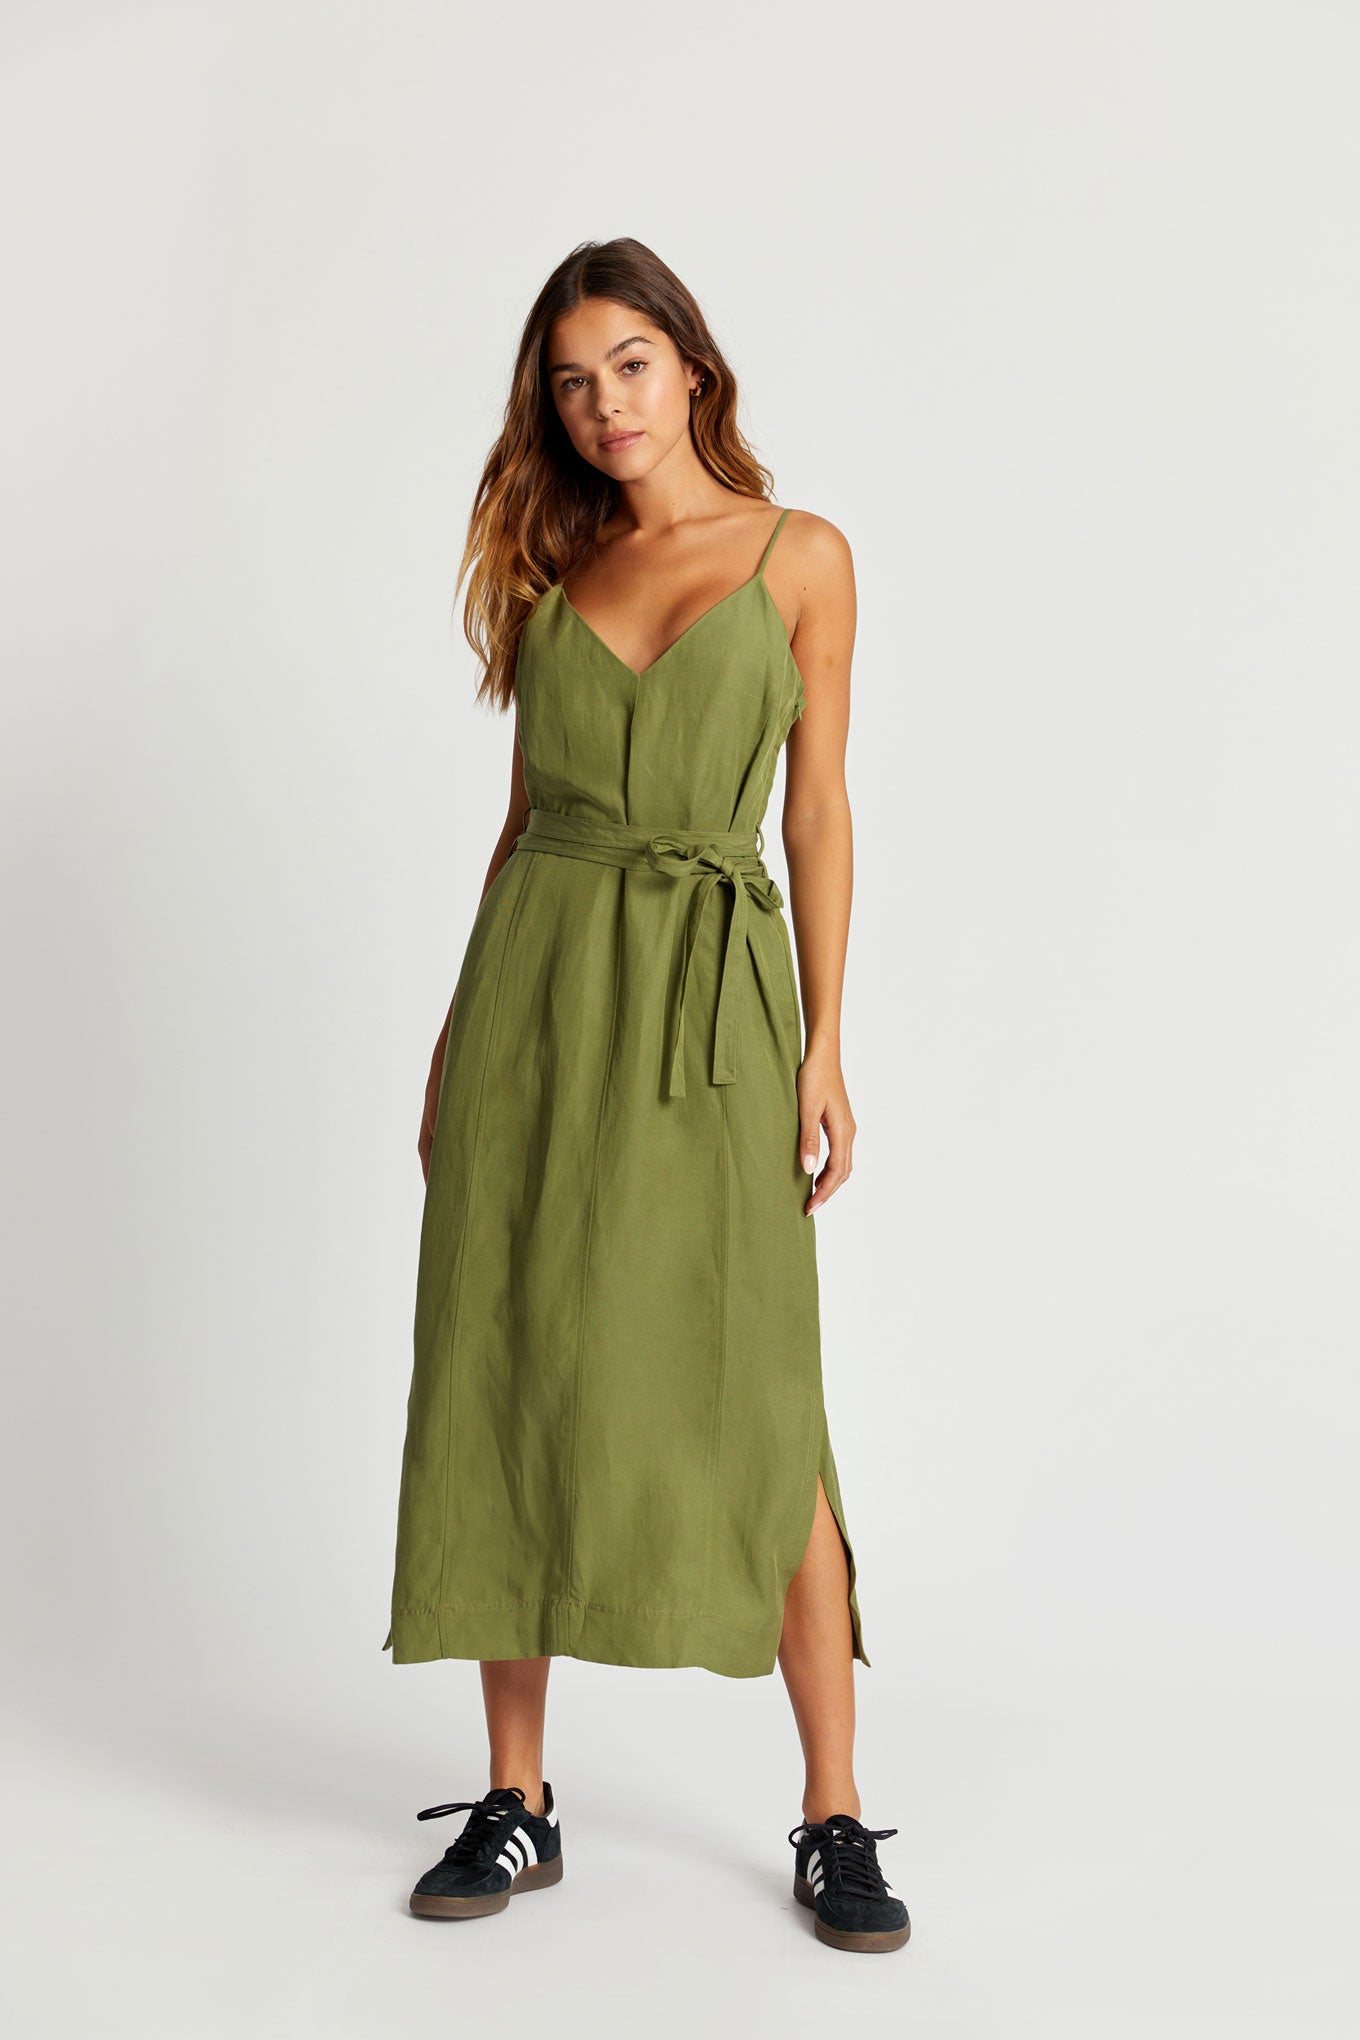 IMAN Tencel Linen Slip Dress - Khaki Green, SIZE 1 / UK 8 / EUR 36